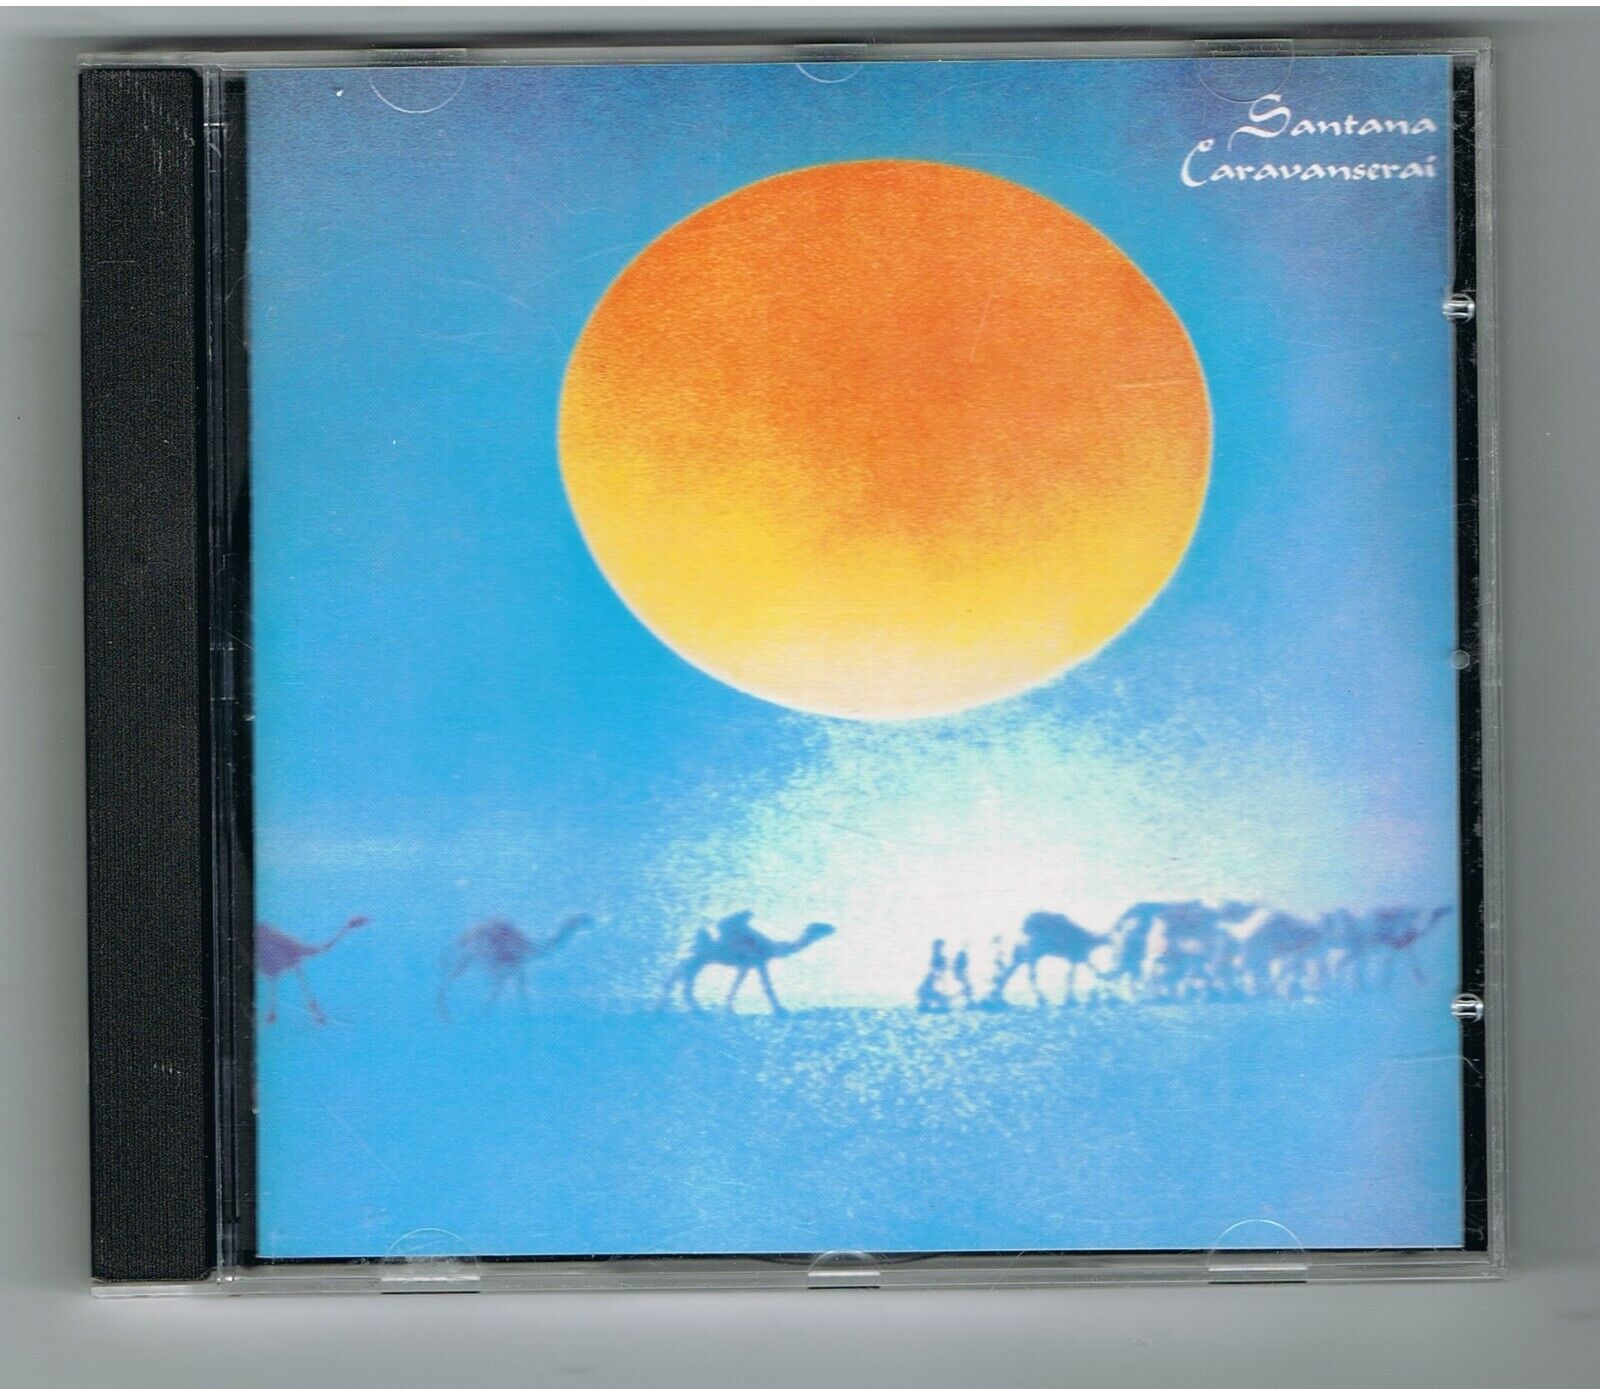 ♫ - SANTANA - CARAVENSERAI - 1972 - CD 10 TITRES - TRÈS BON ÉTAT - ♫